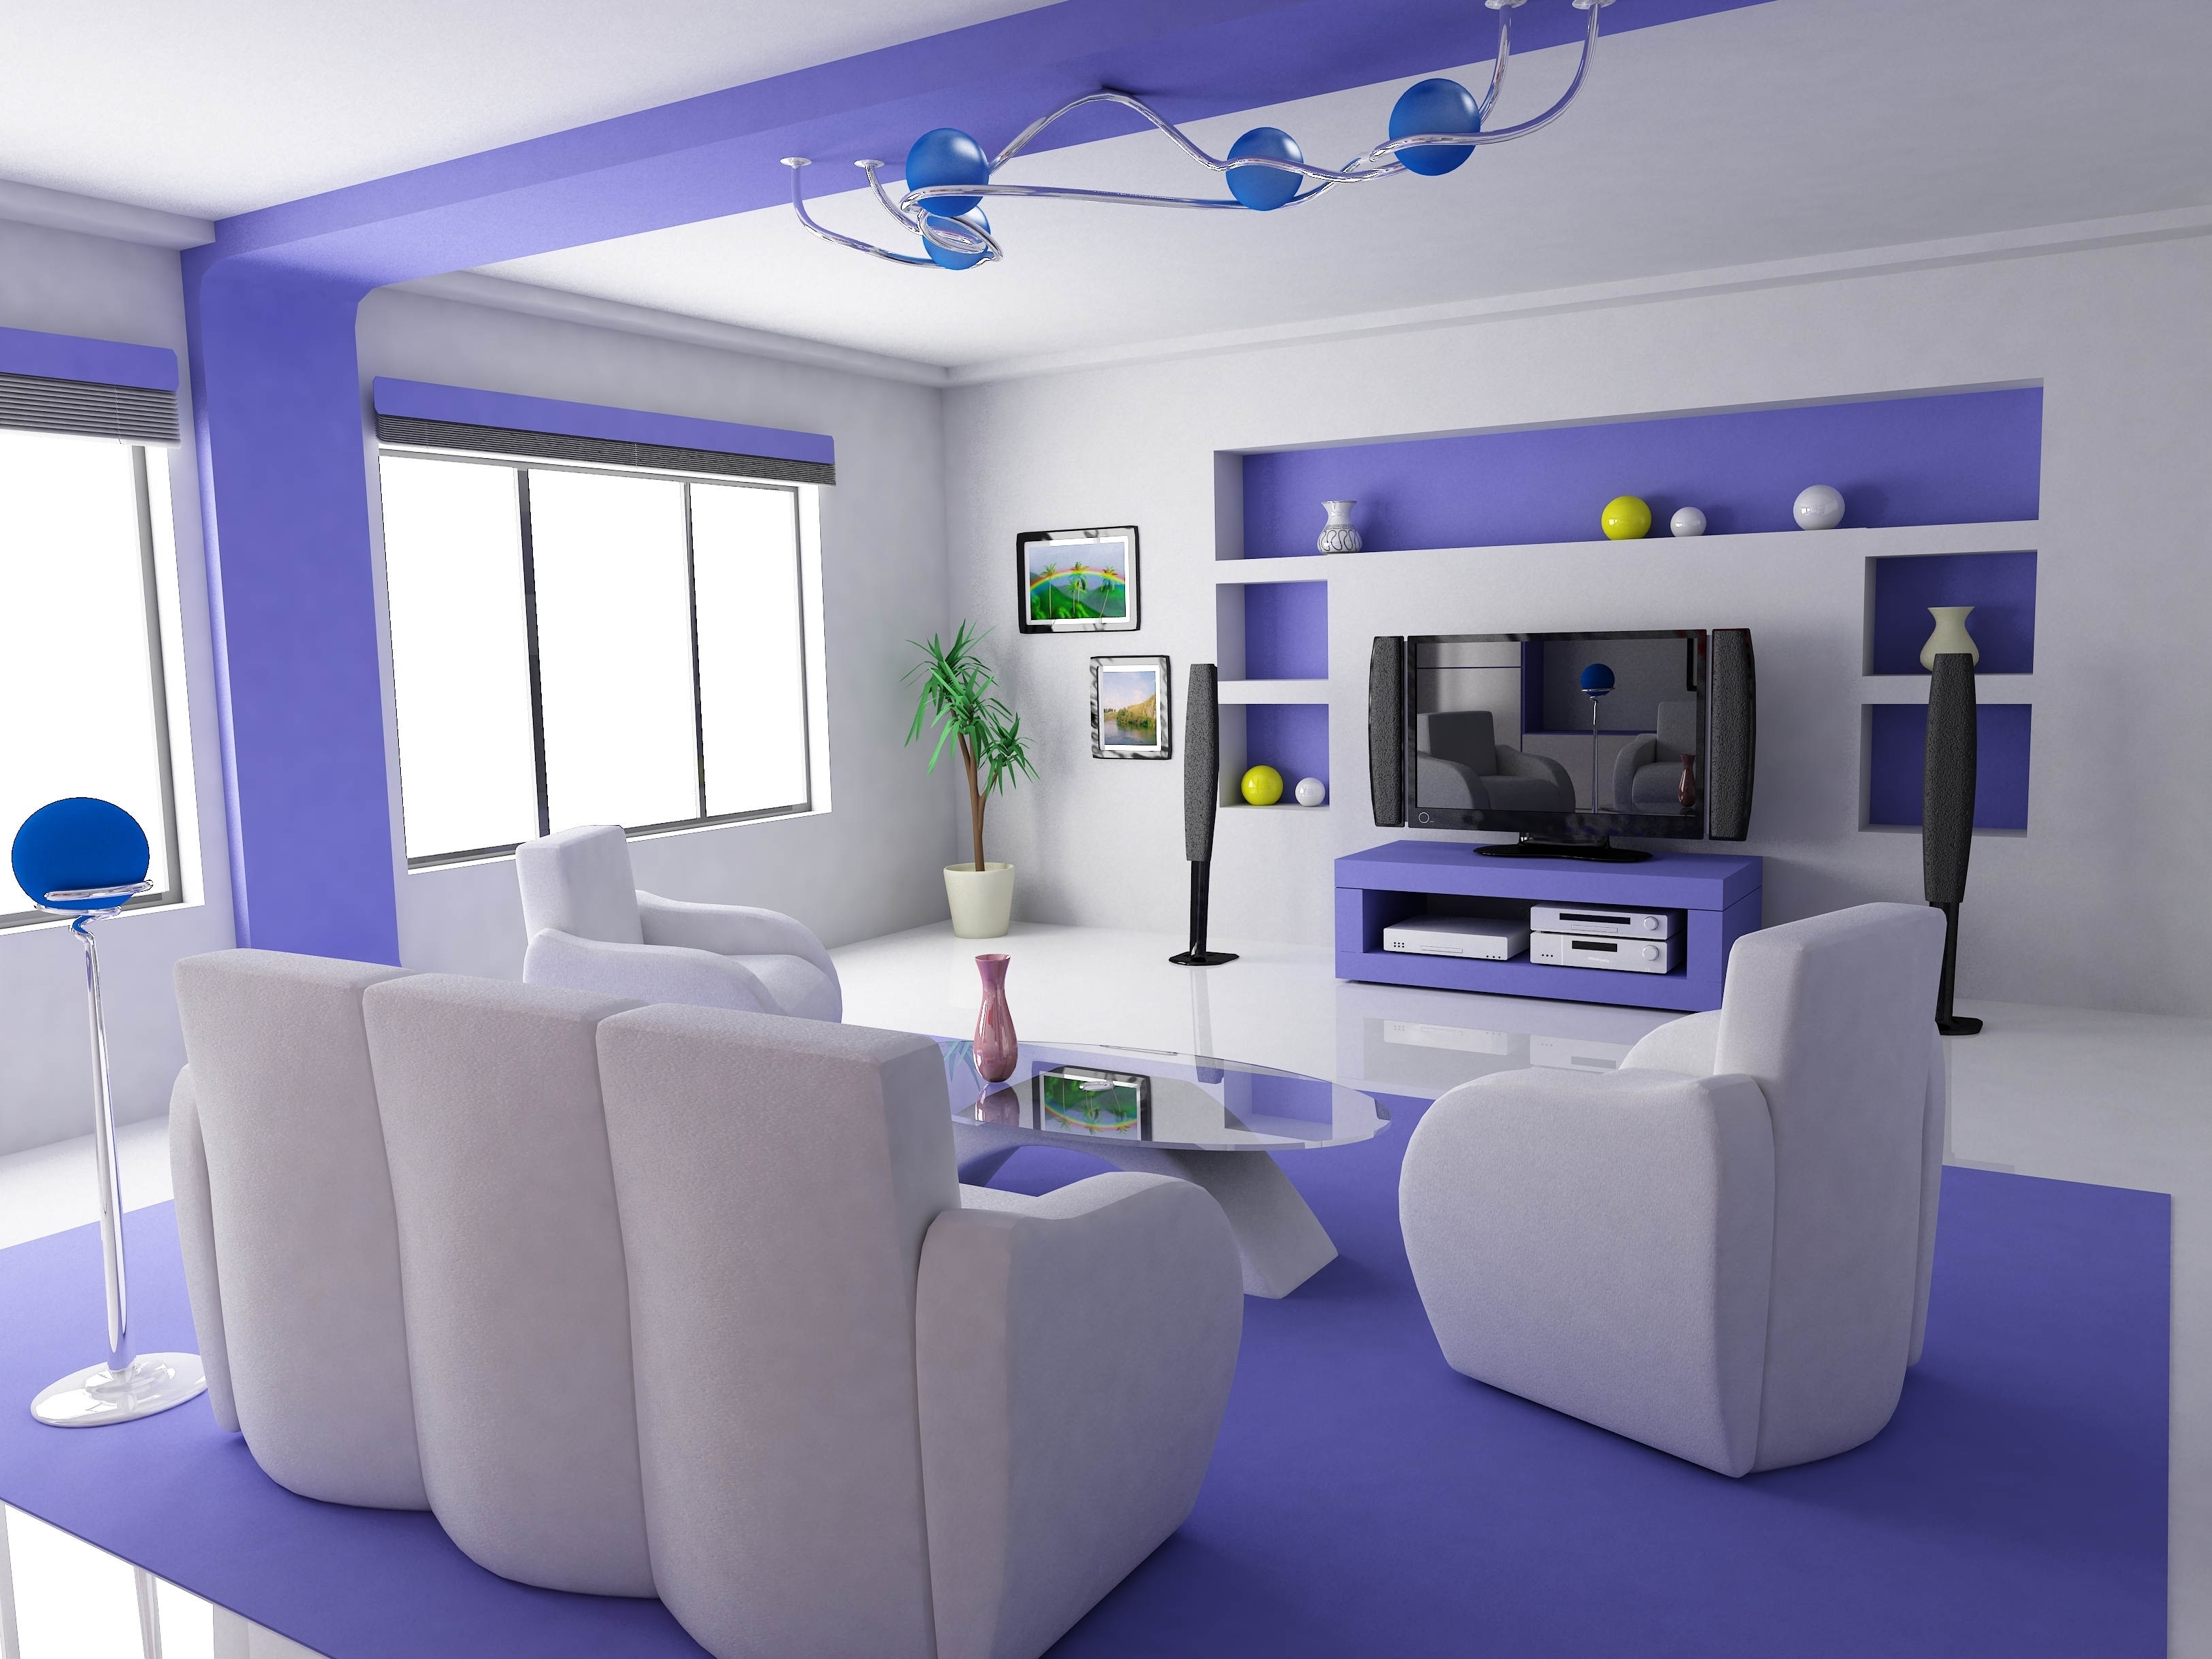 Free HD miscellanea, cinema, interior, miscellaneous, design, sofa, graphics, living room, chairs, chandelier, armchairs